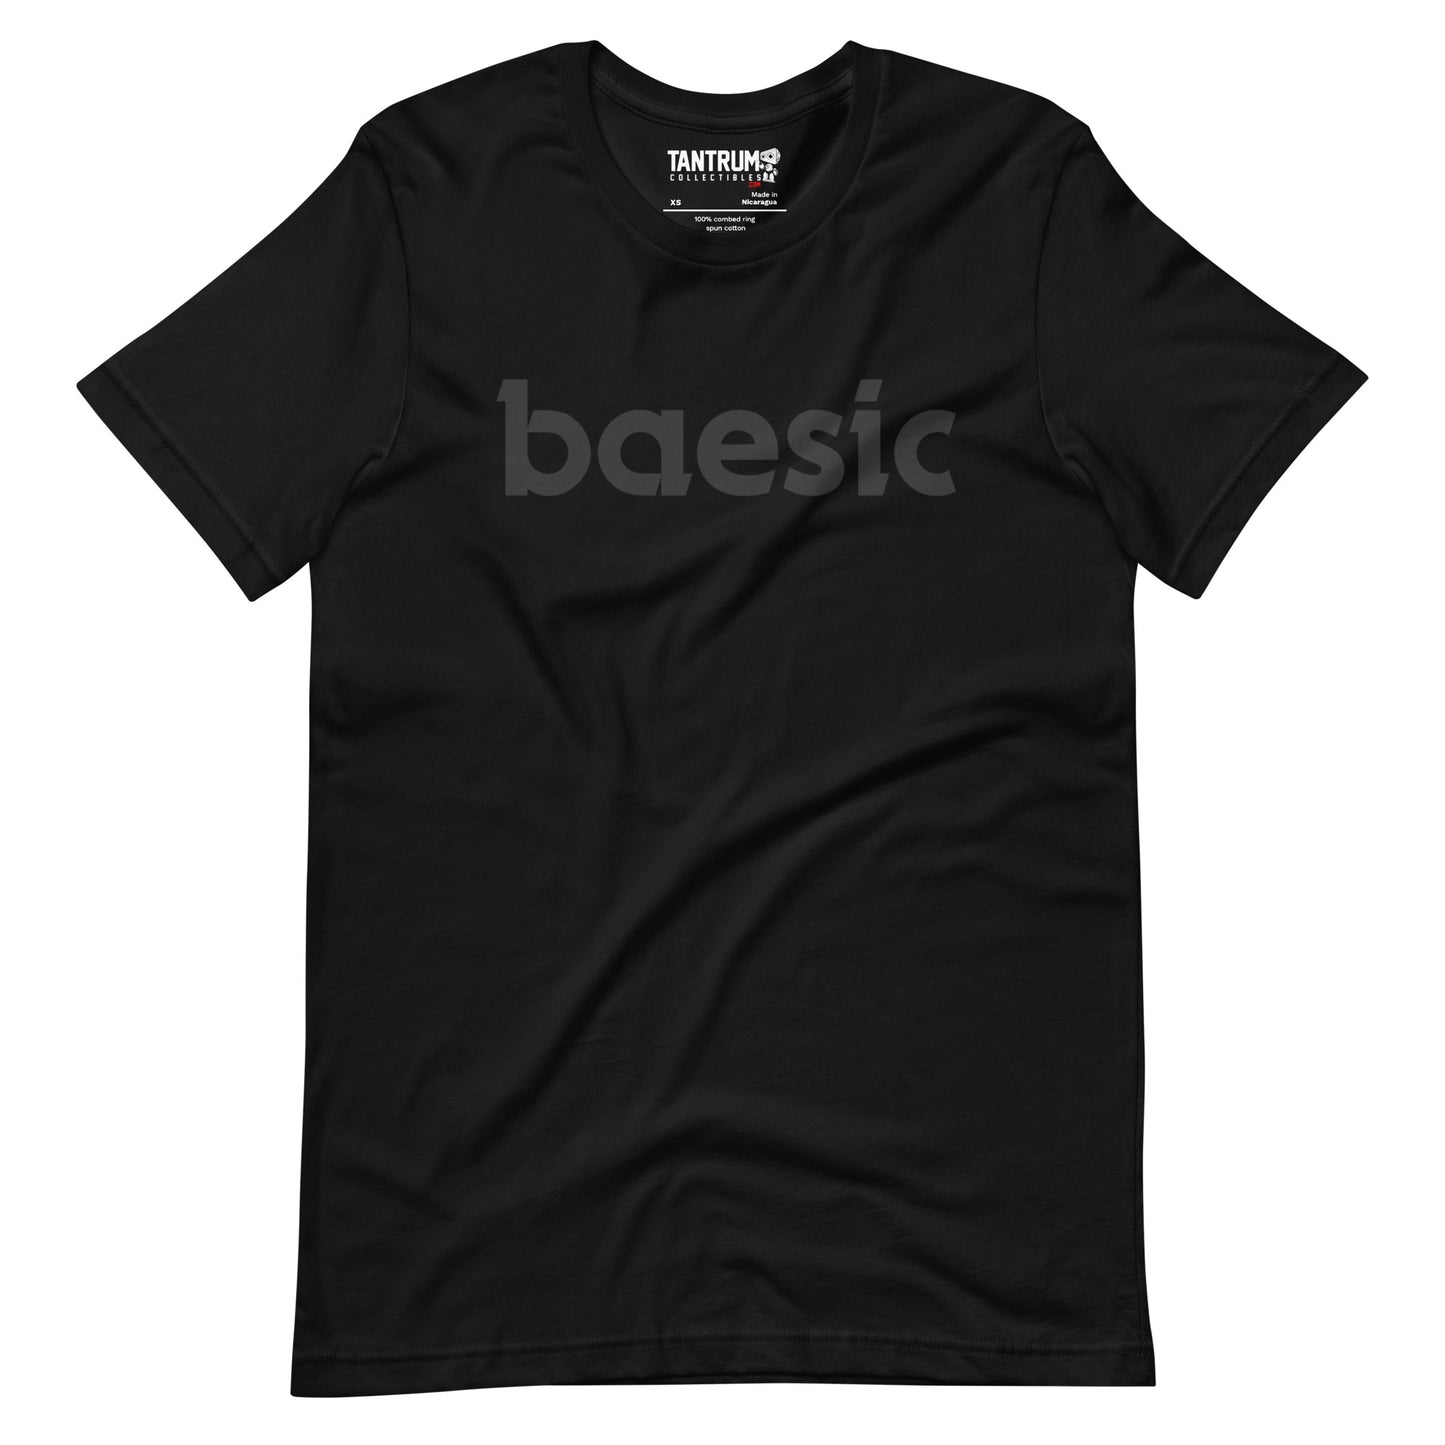 Baeginning - Unisex T-Shirt - Baesic